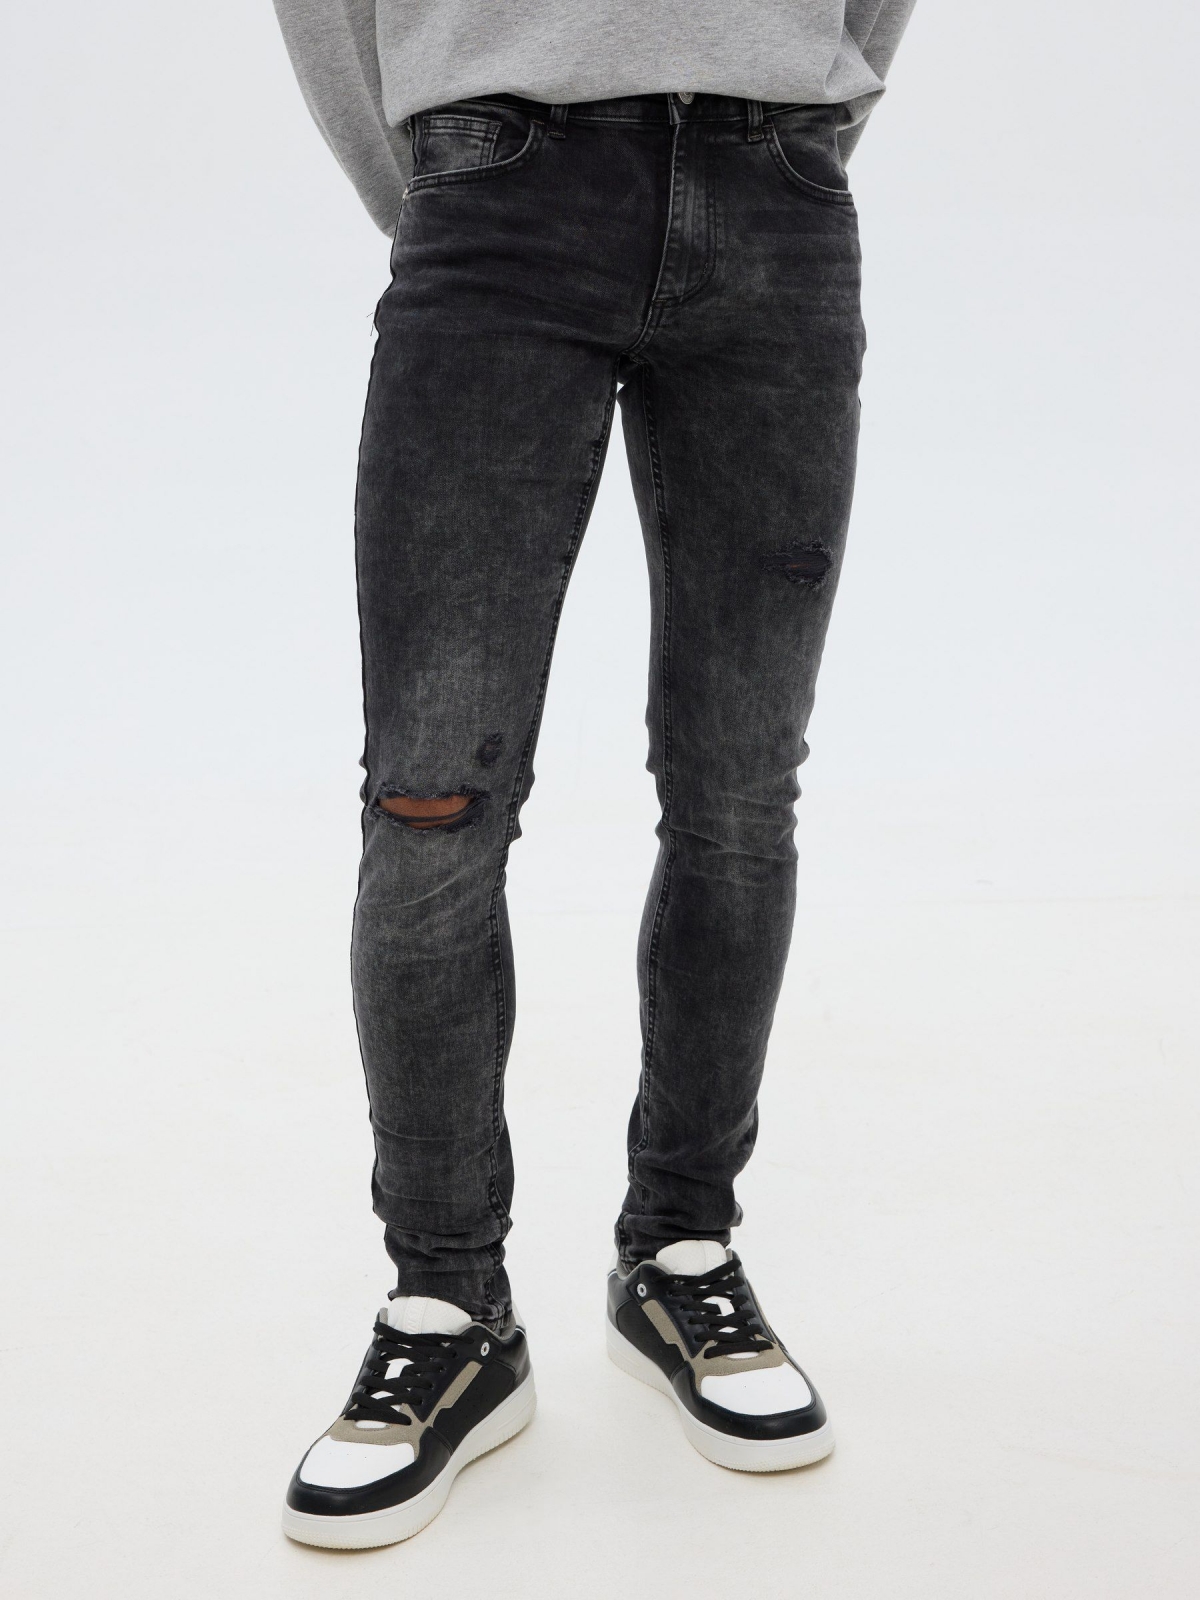 Jeans super slim gris oscuro vista media trasera